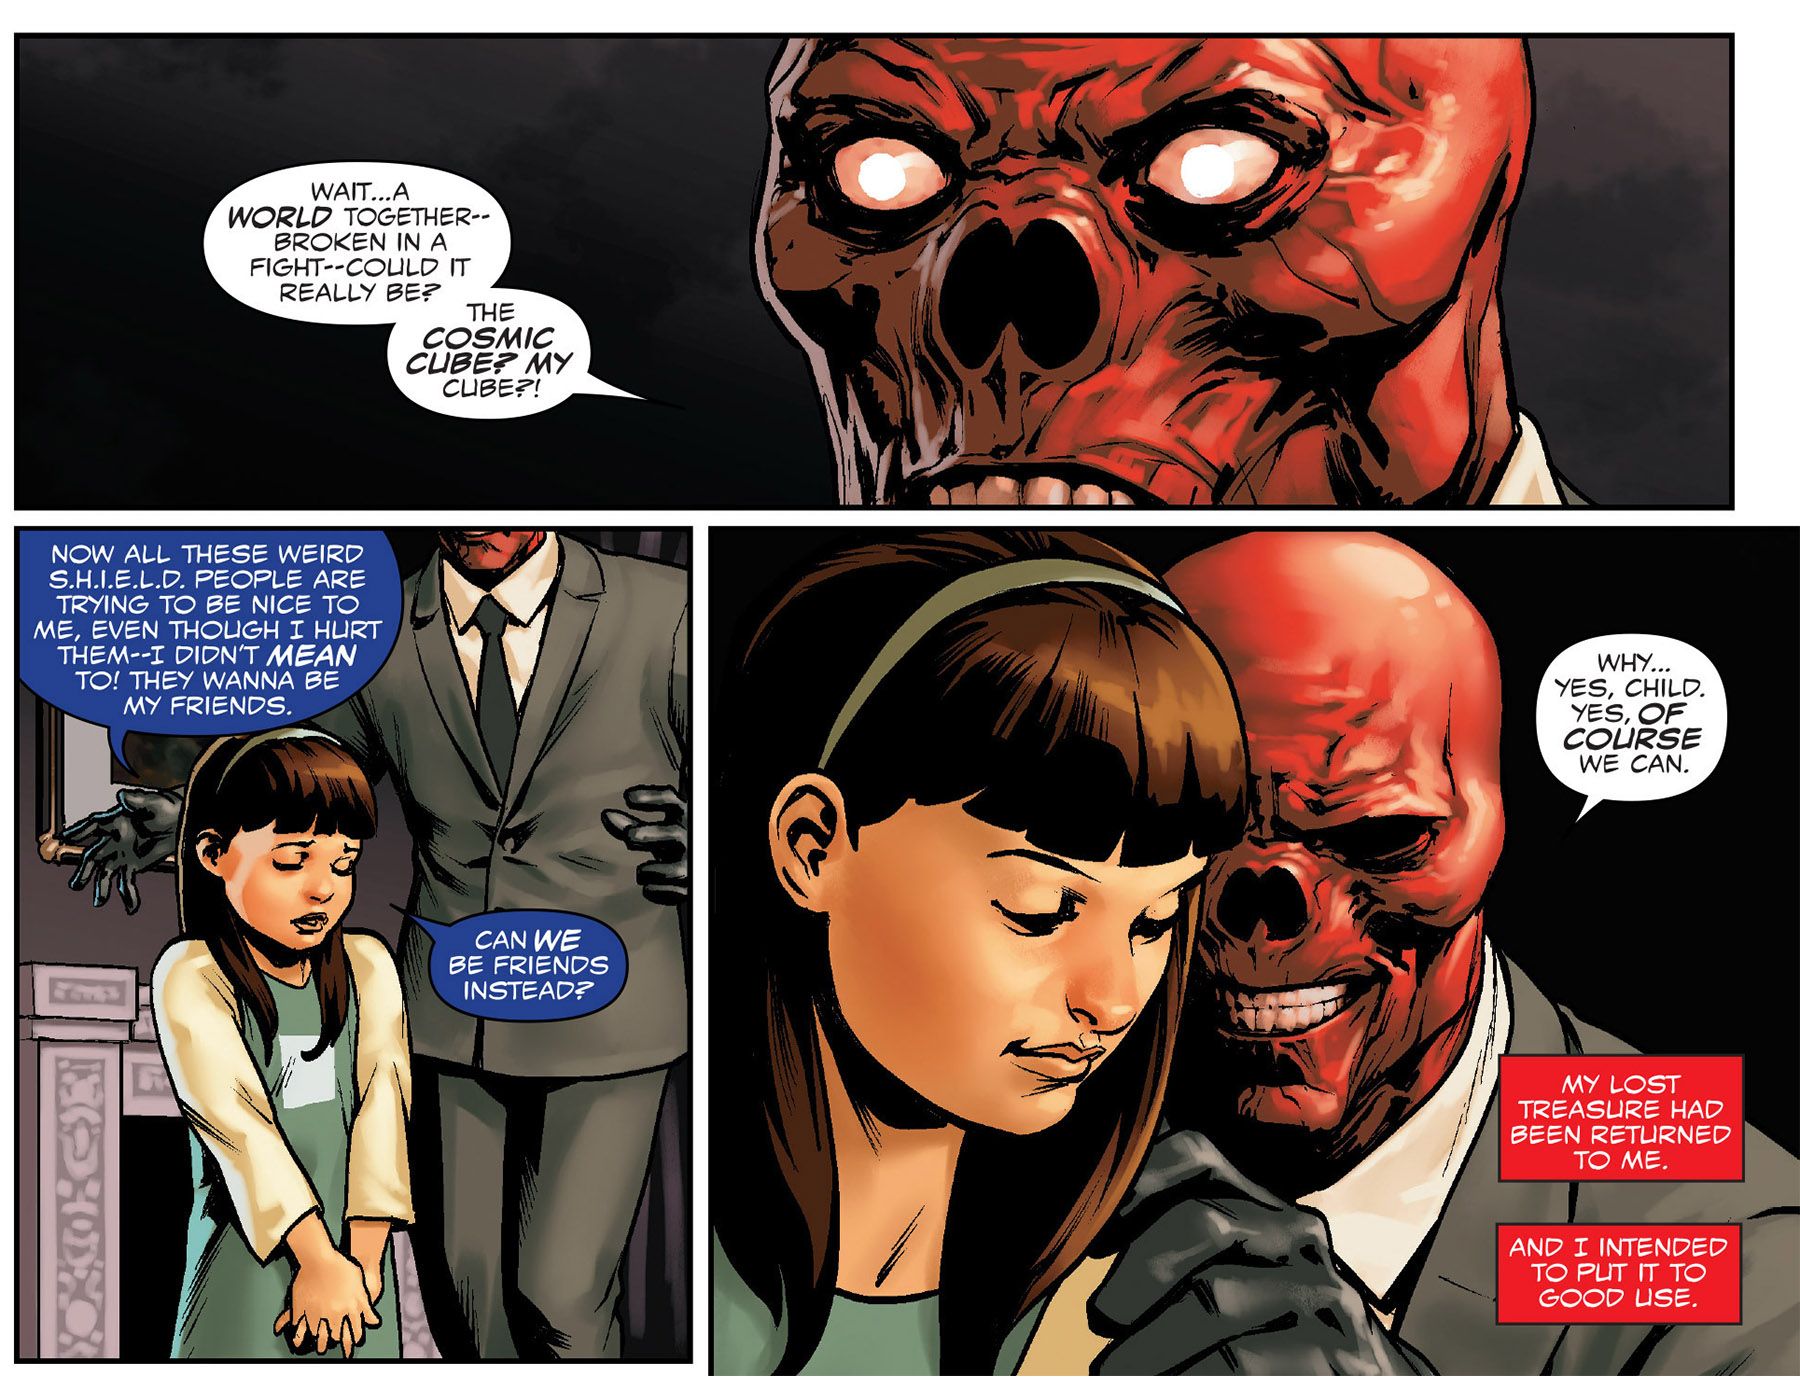 The Red Skull's Cosmic Cube (Kobik) in Captain America: Steve Rogers #2